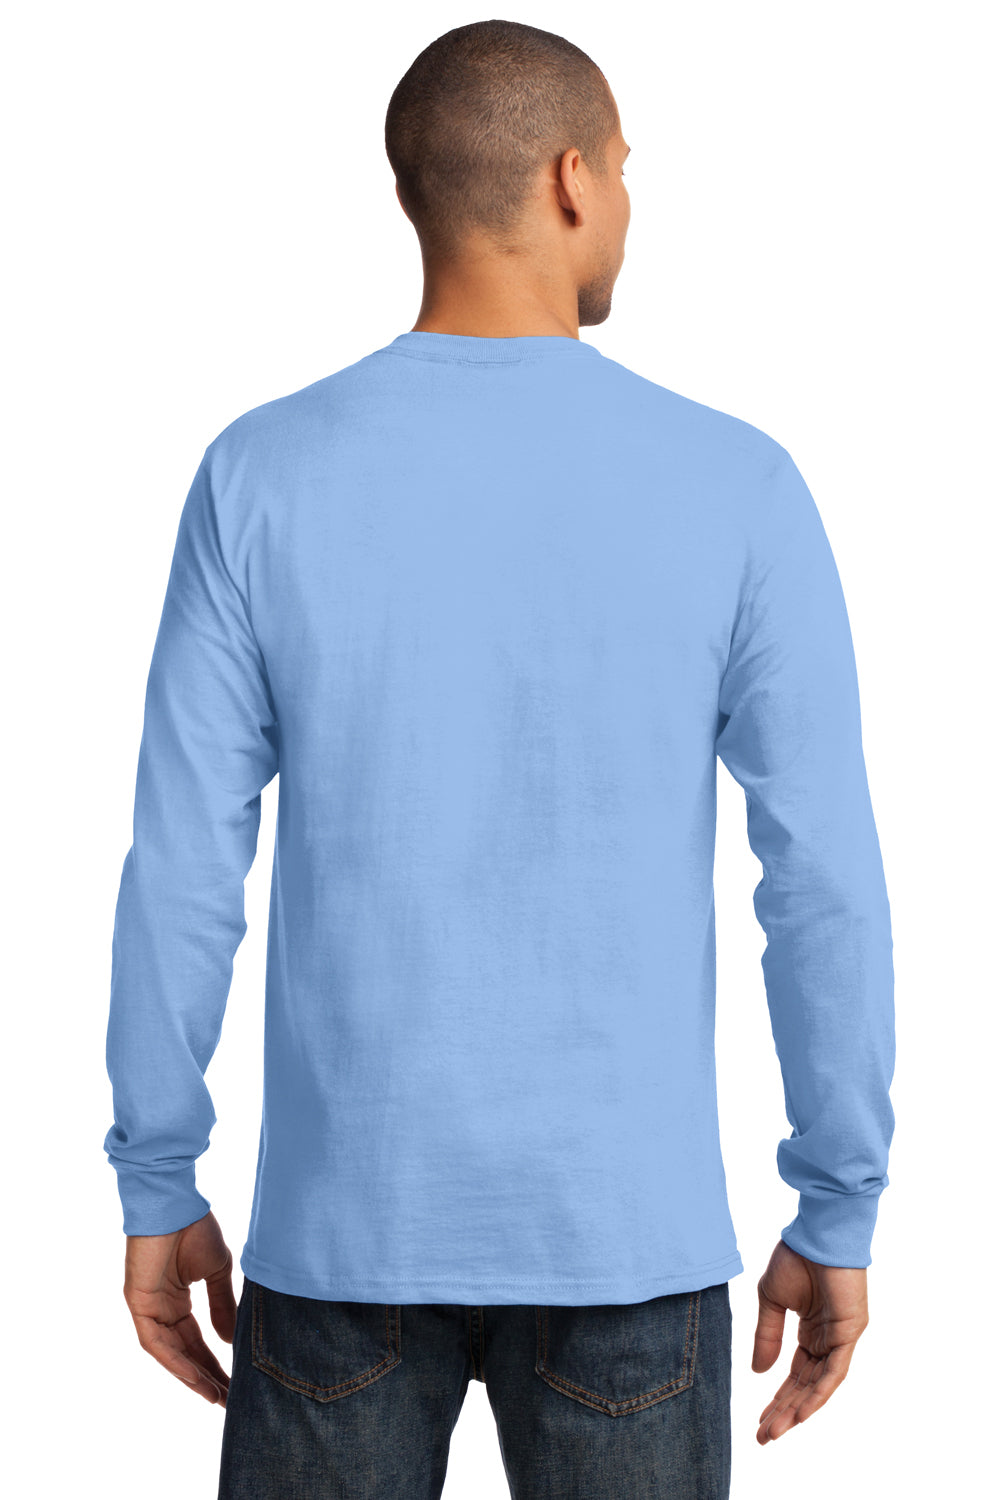 Port & Company PC61LS Mens Essential Long Sleeve Crewneck T-Shirt Light Blue Back